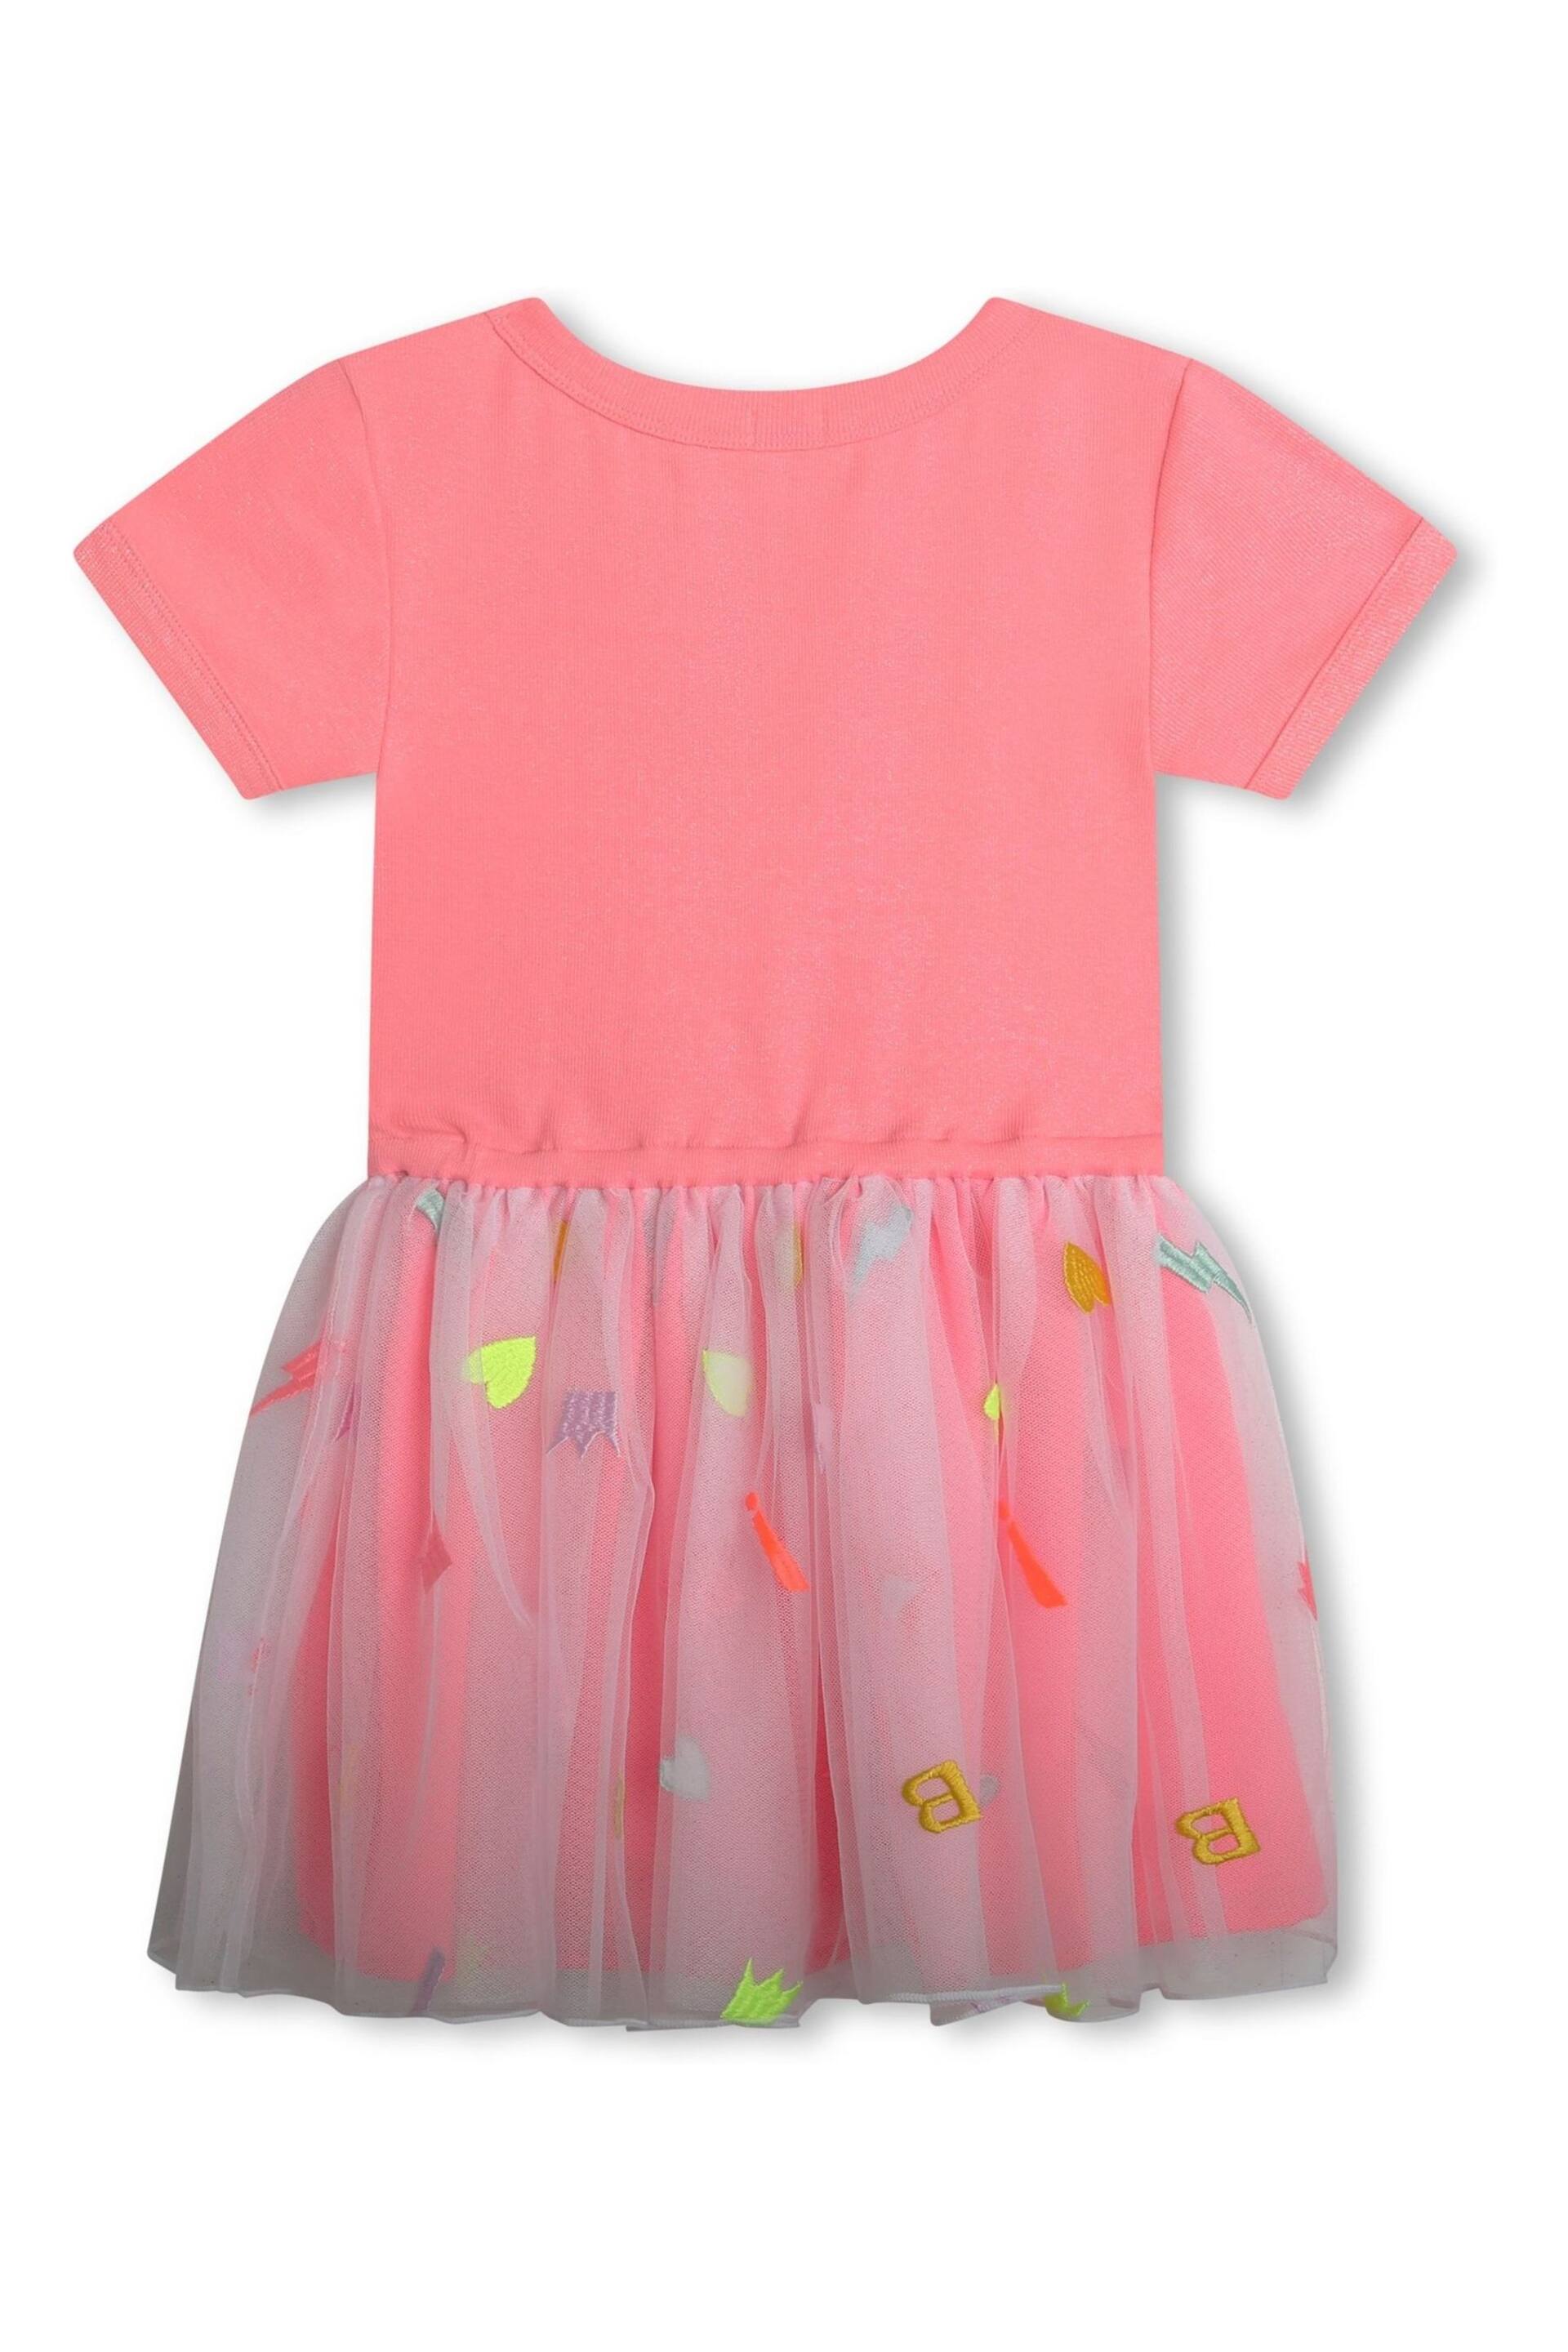 Billieblush Pink Short Sleeve Tutu Skirt Party Dress - Image 2 of 3